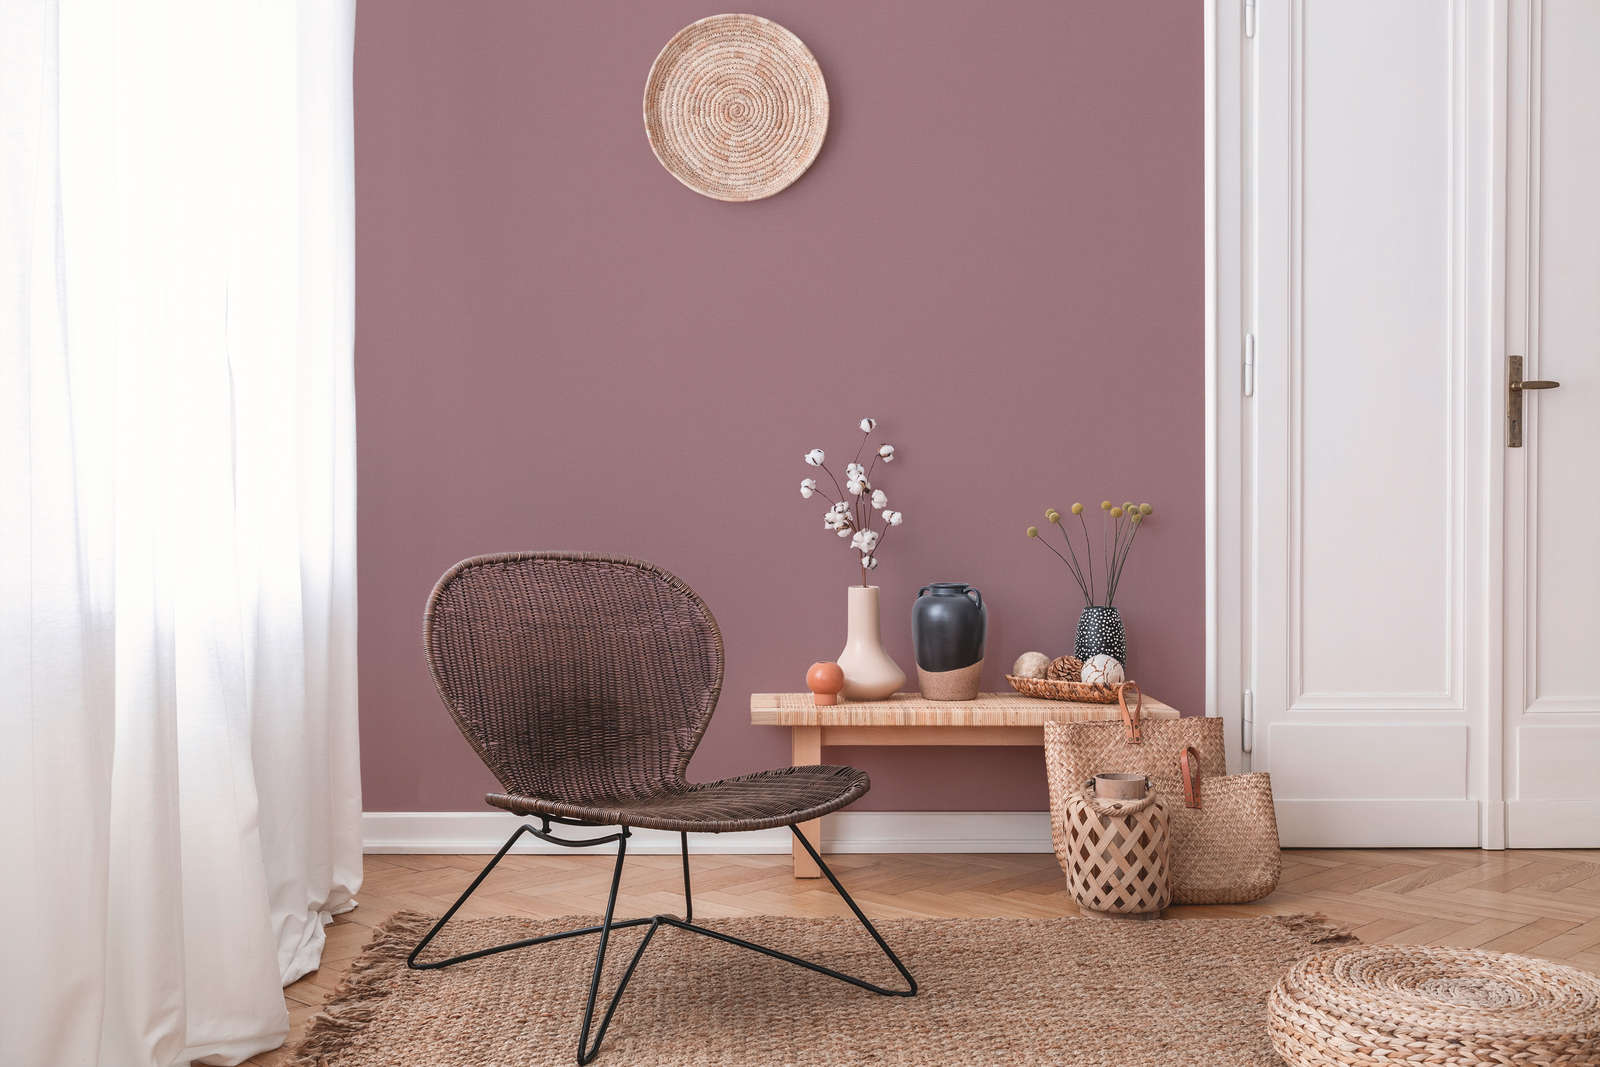             Plain non-woven wallpaper with textile look PVC-free - purple
        